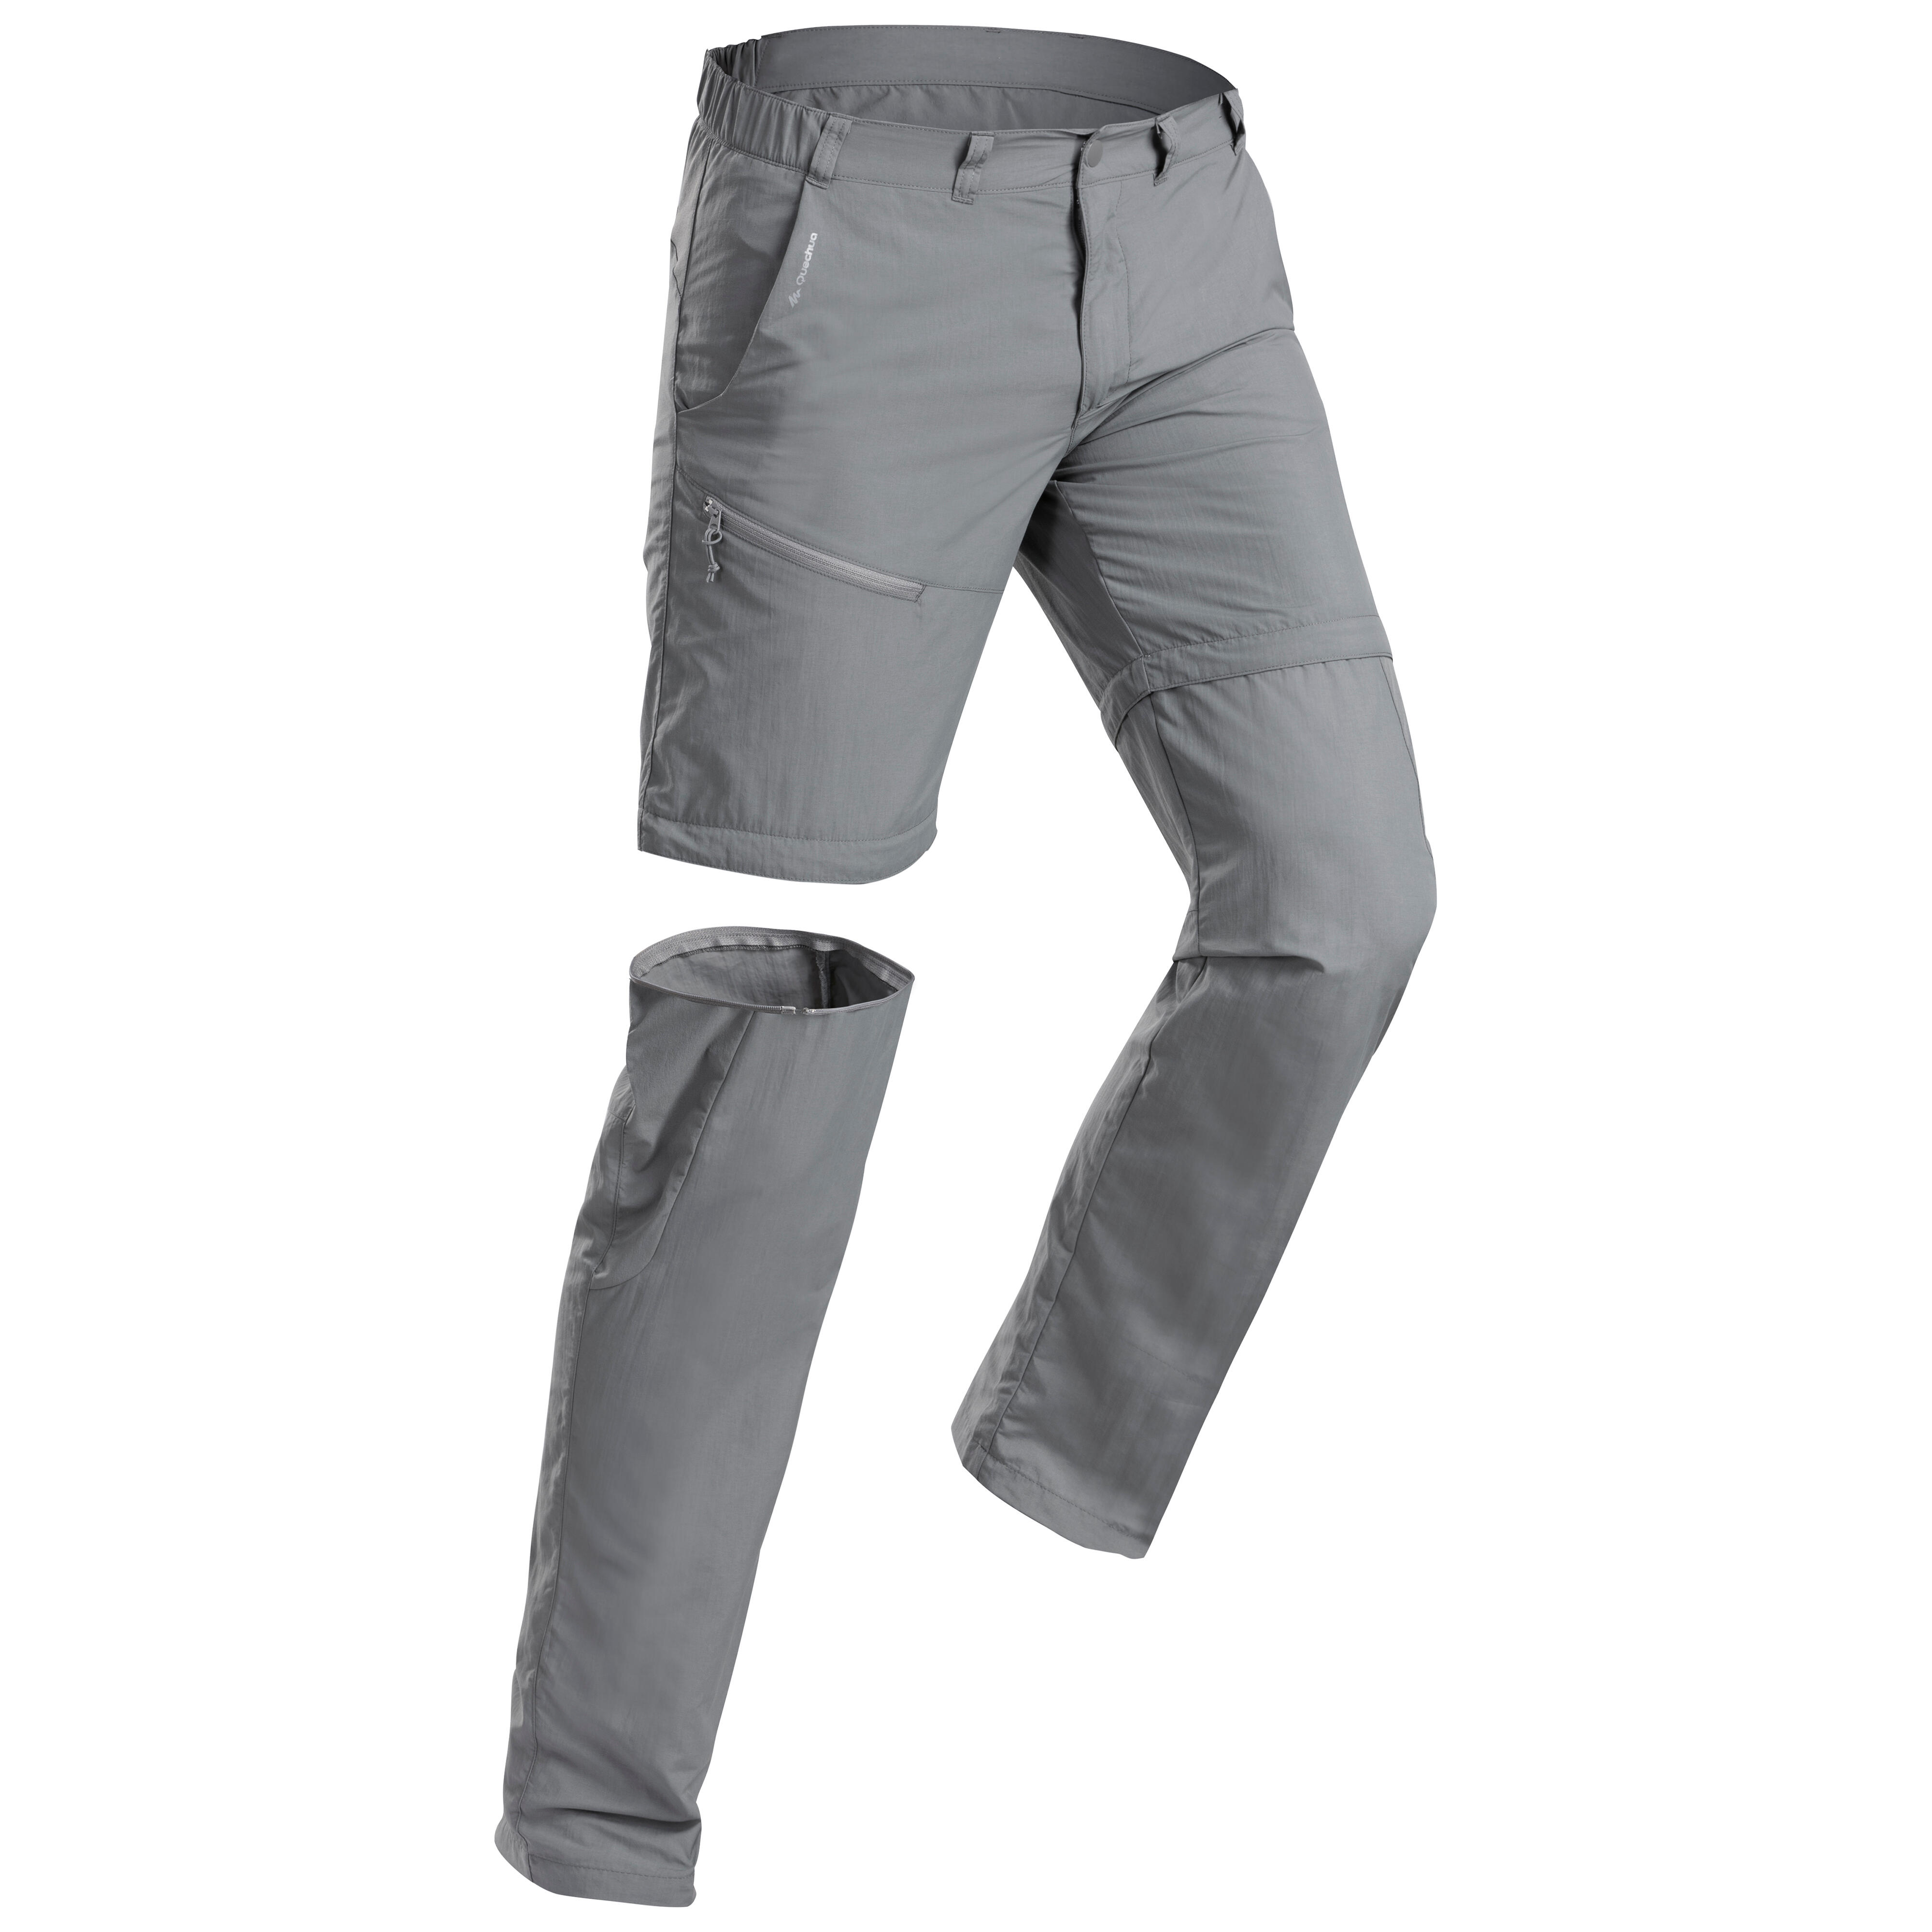 Pantalon Modulabil Drumeție la Munte MH150 gri bărbați La Oferta Online decathlon imagine La Oferta Online